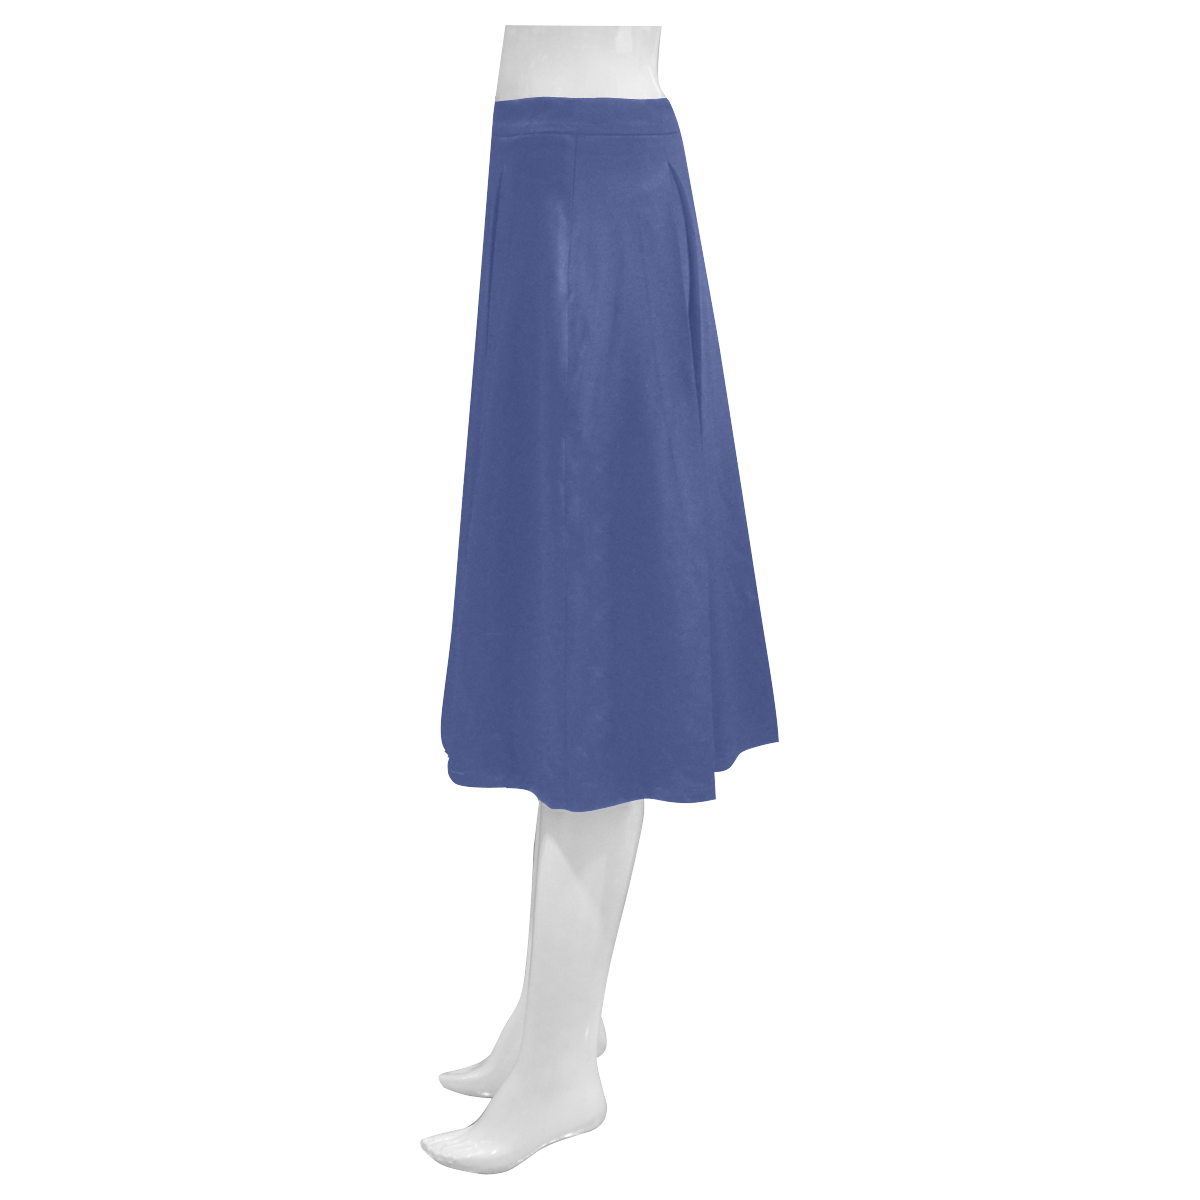 Deep Ultramarine Mnemosyne Women's Crepe Skirt (Model D16)